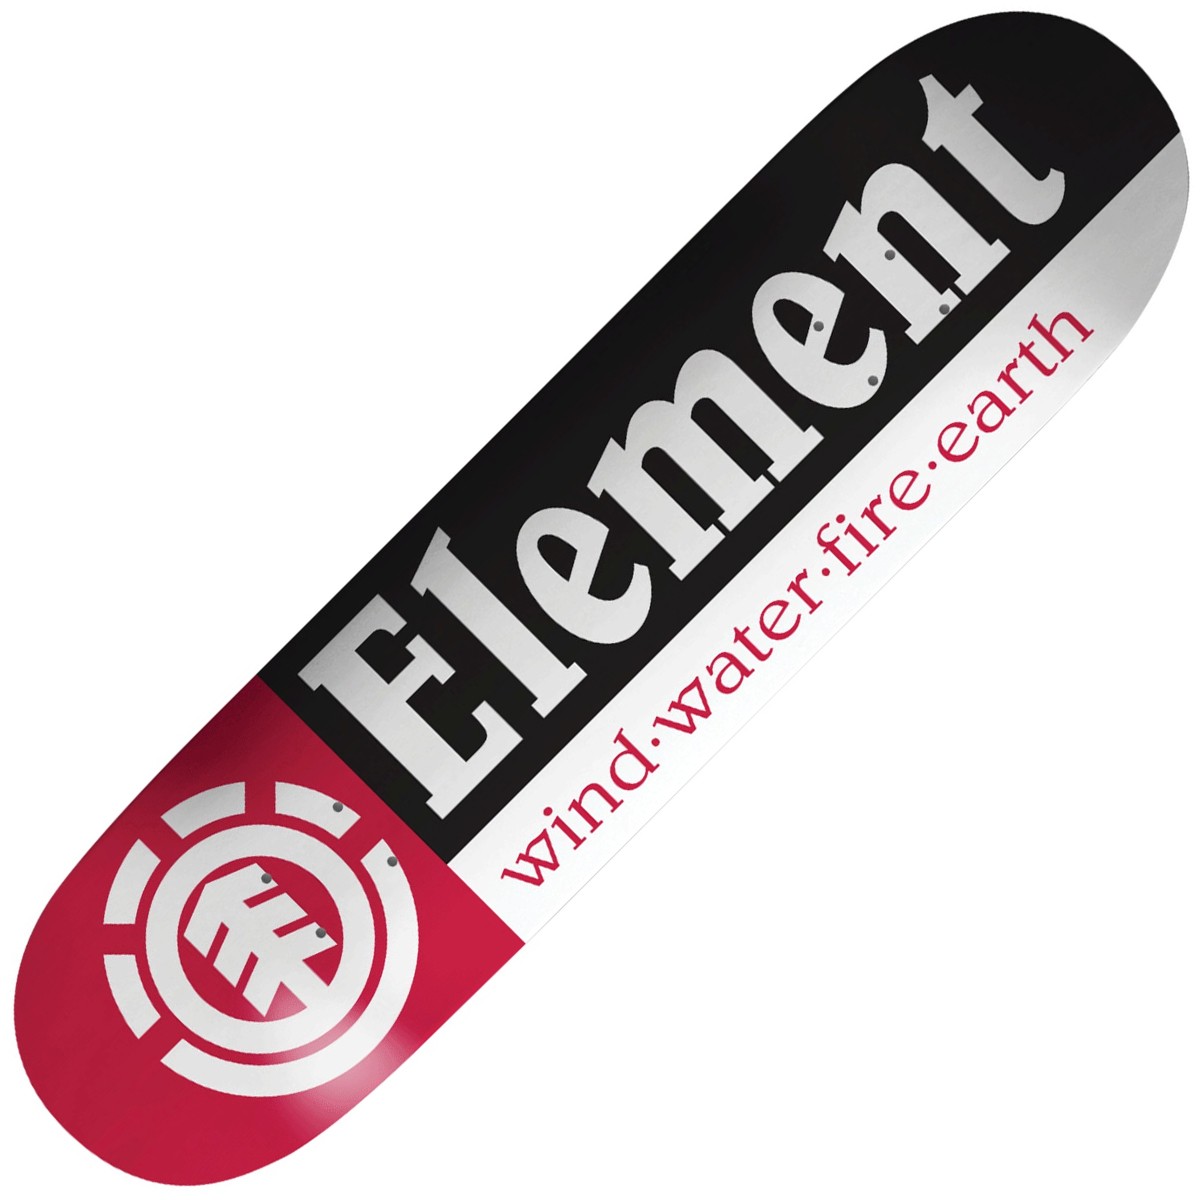 Section element. Скейтборд element Section 7.75. Скейт element. Скейт элемент Гарсия. Element Skateboards.